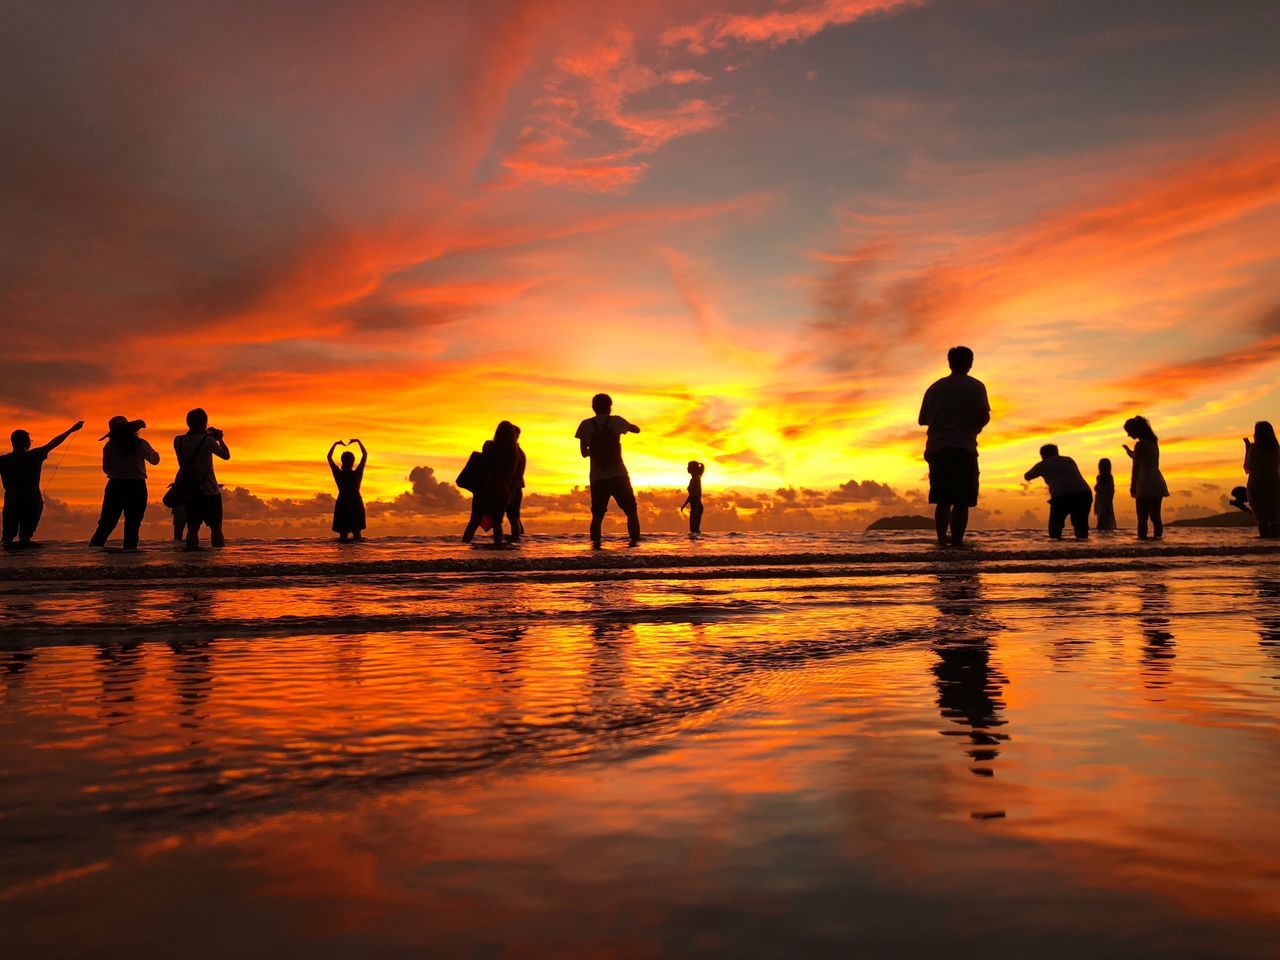 Tanjung Aru Beach, Sabah: How To Reach, Best Time & Tips